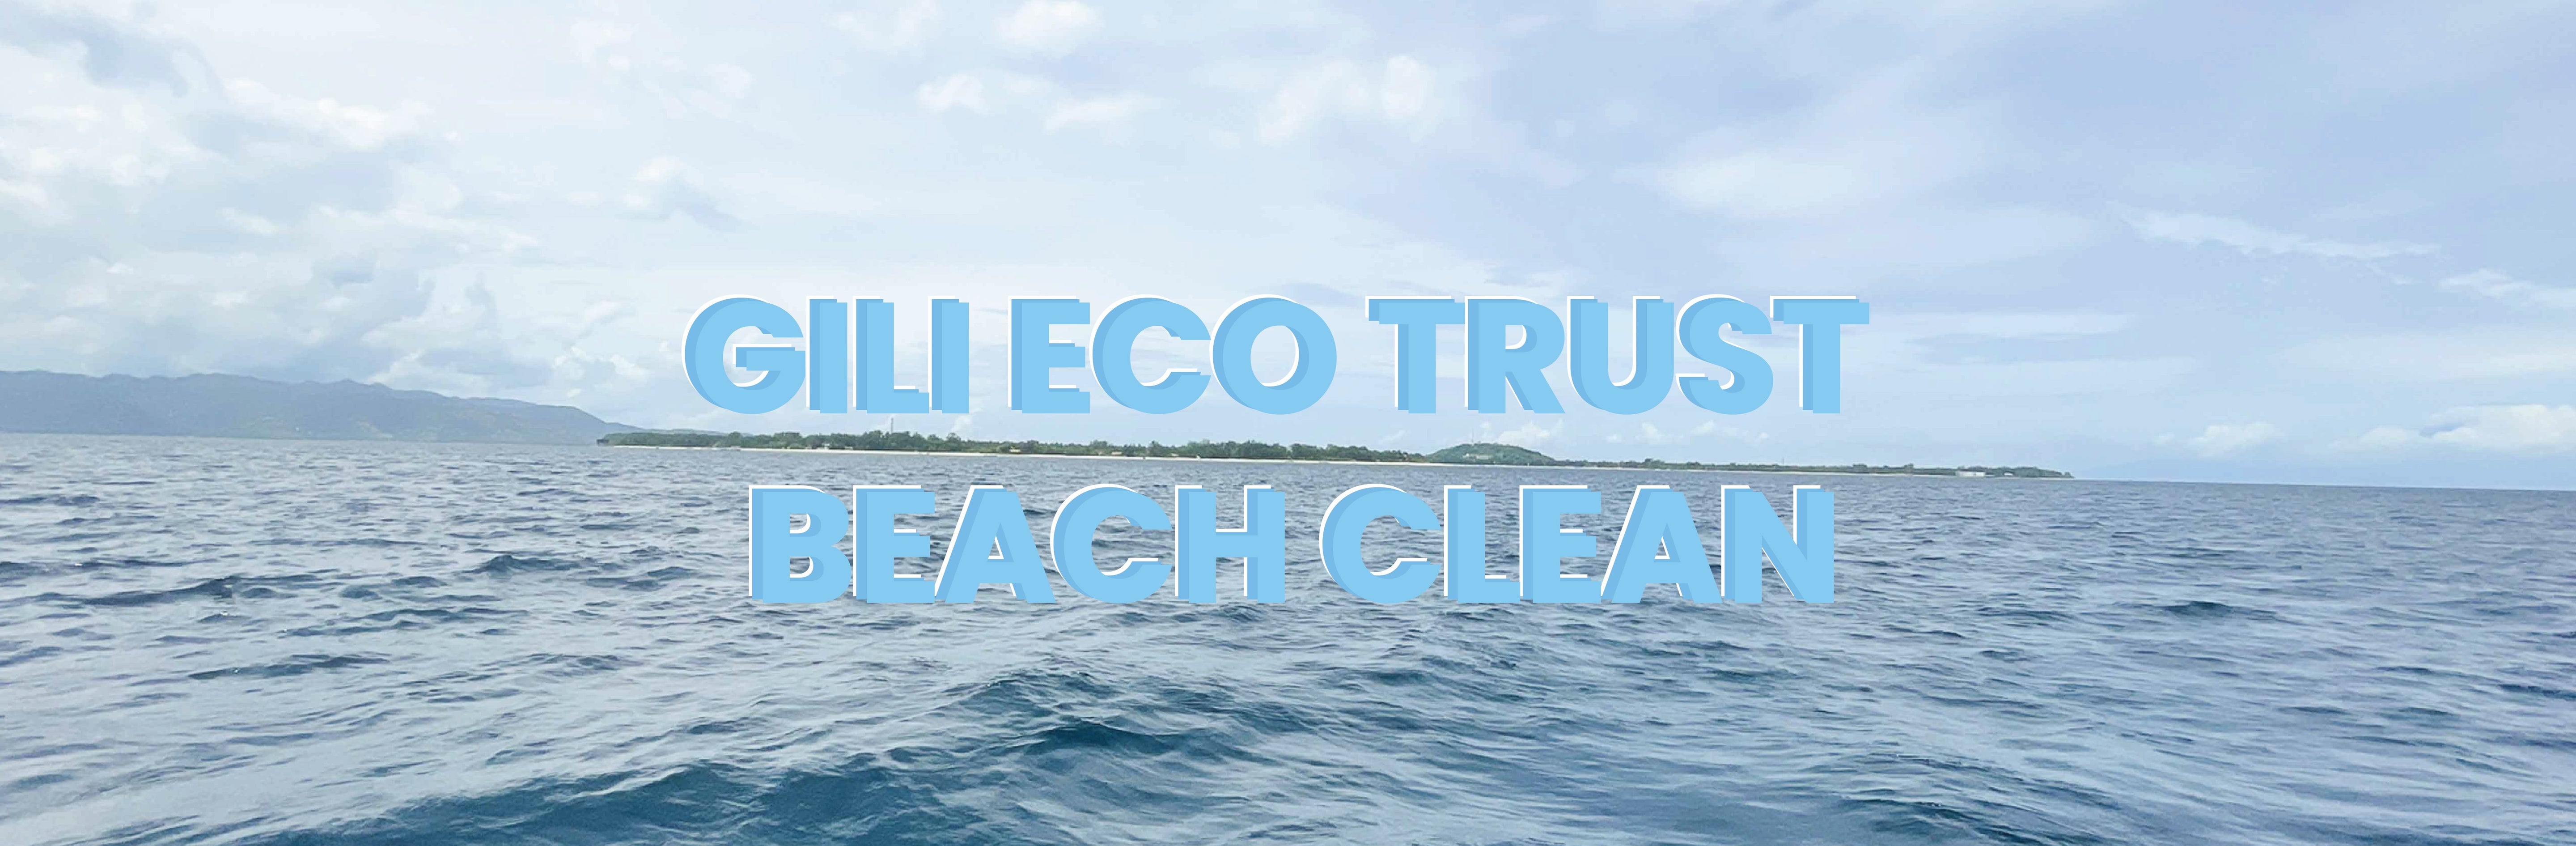 Gili Eco Trust Beach Clean - Gili Trawangan - dewerstone